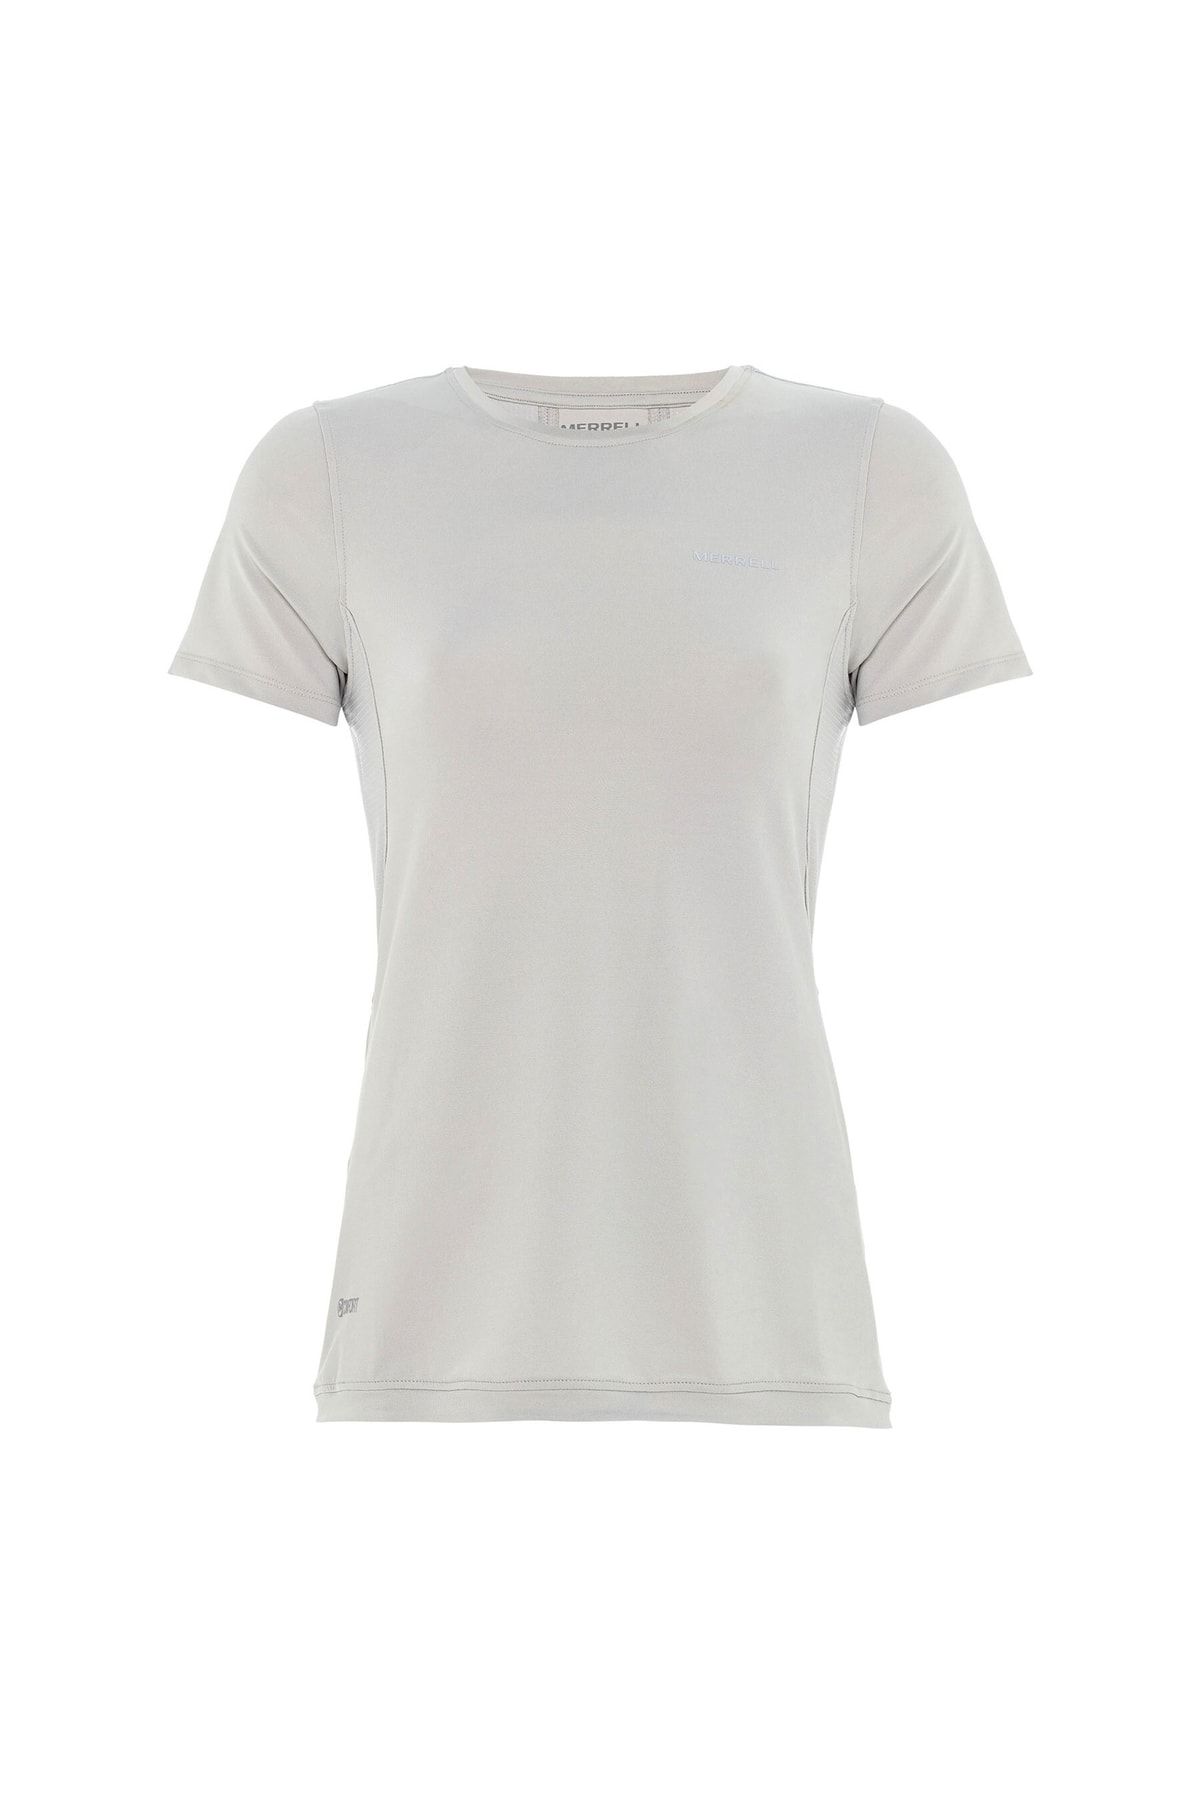 Merrell Kadın T-shirt Grey Tınt